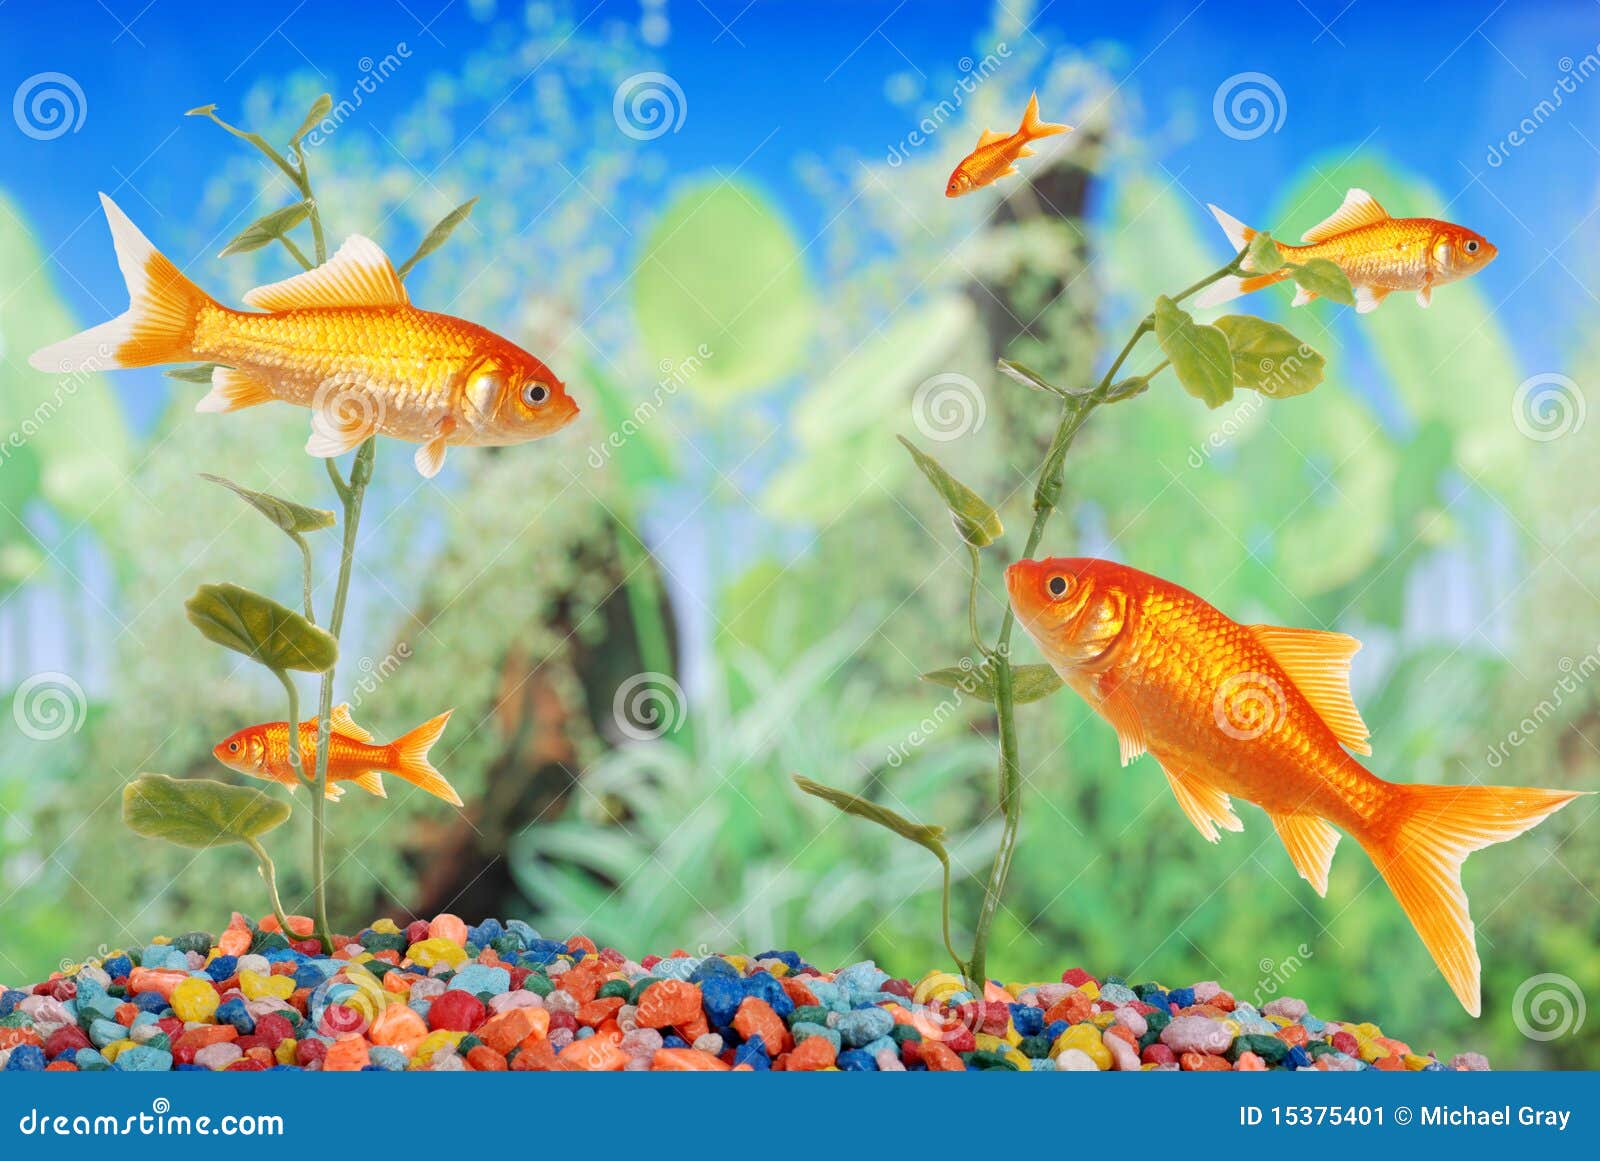 Fish tank with goldfish stock image. Image of fish, closeup - 15375401